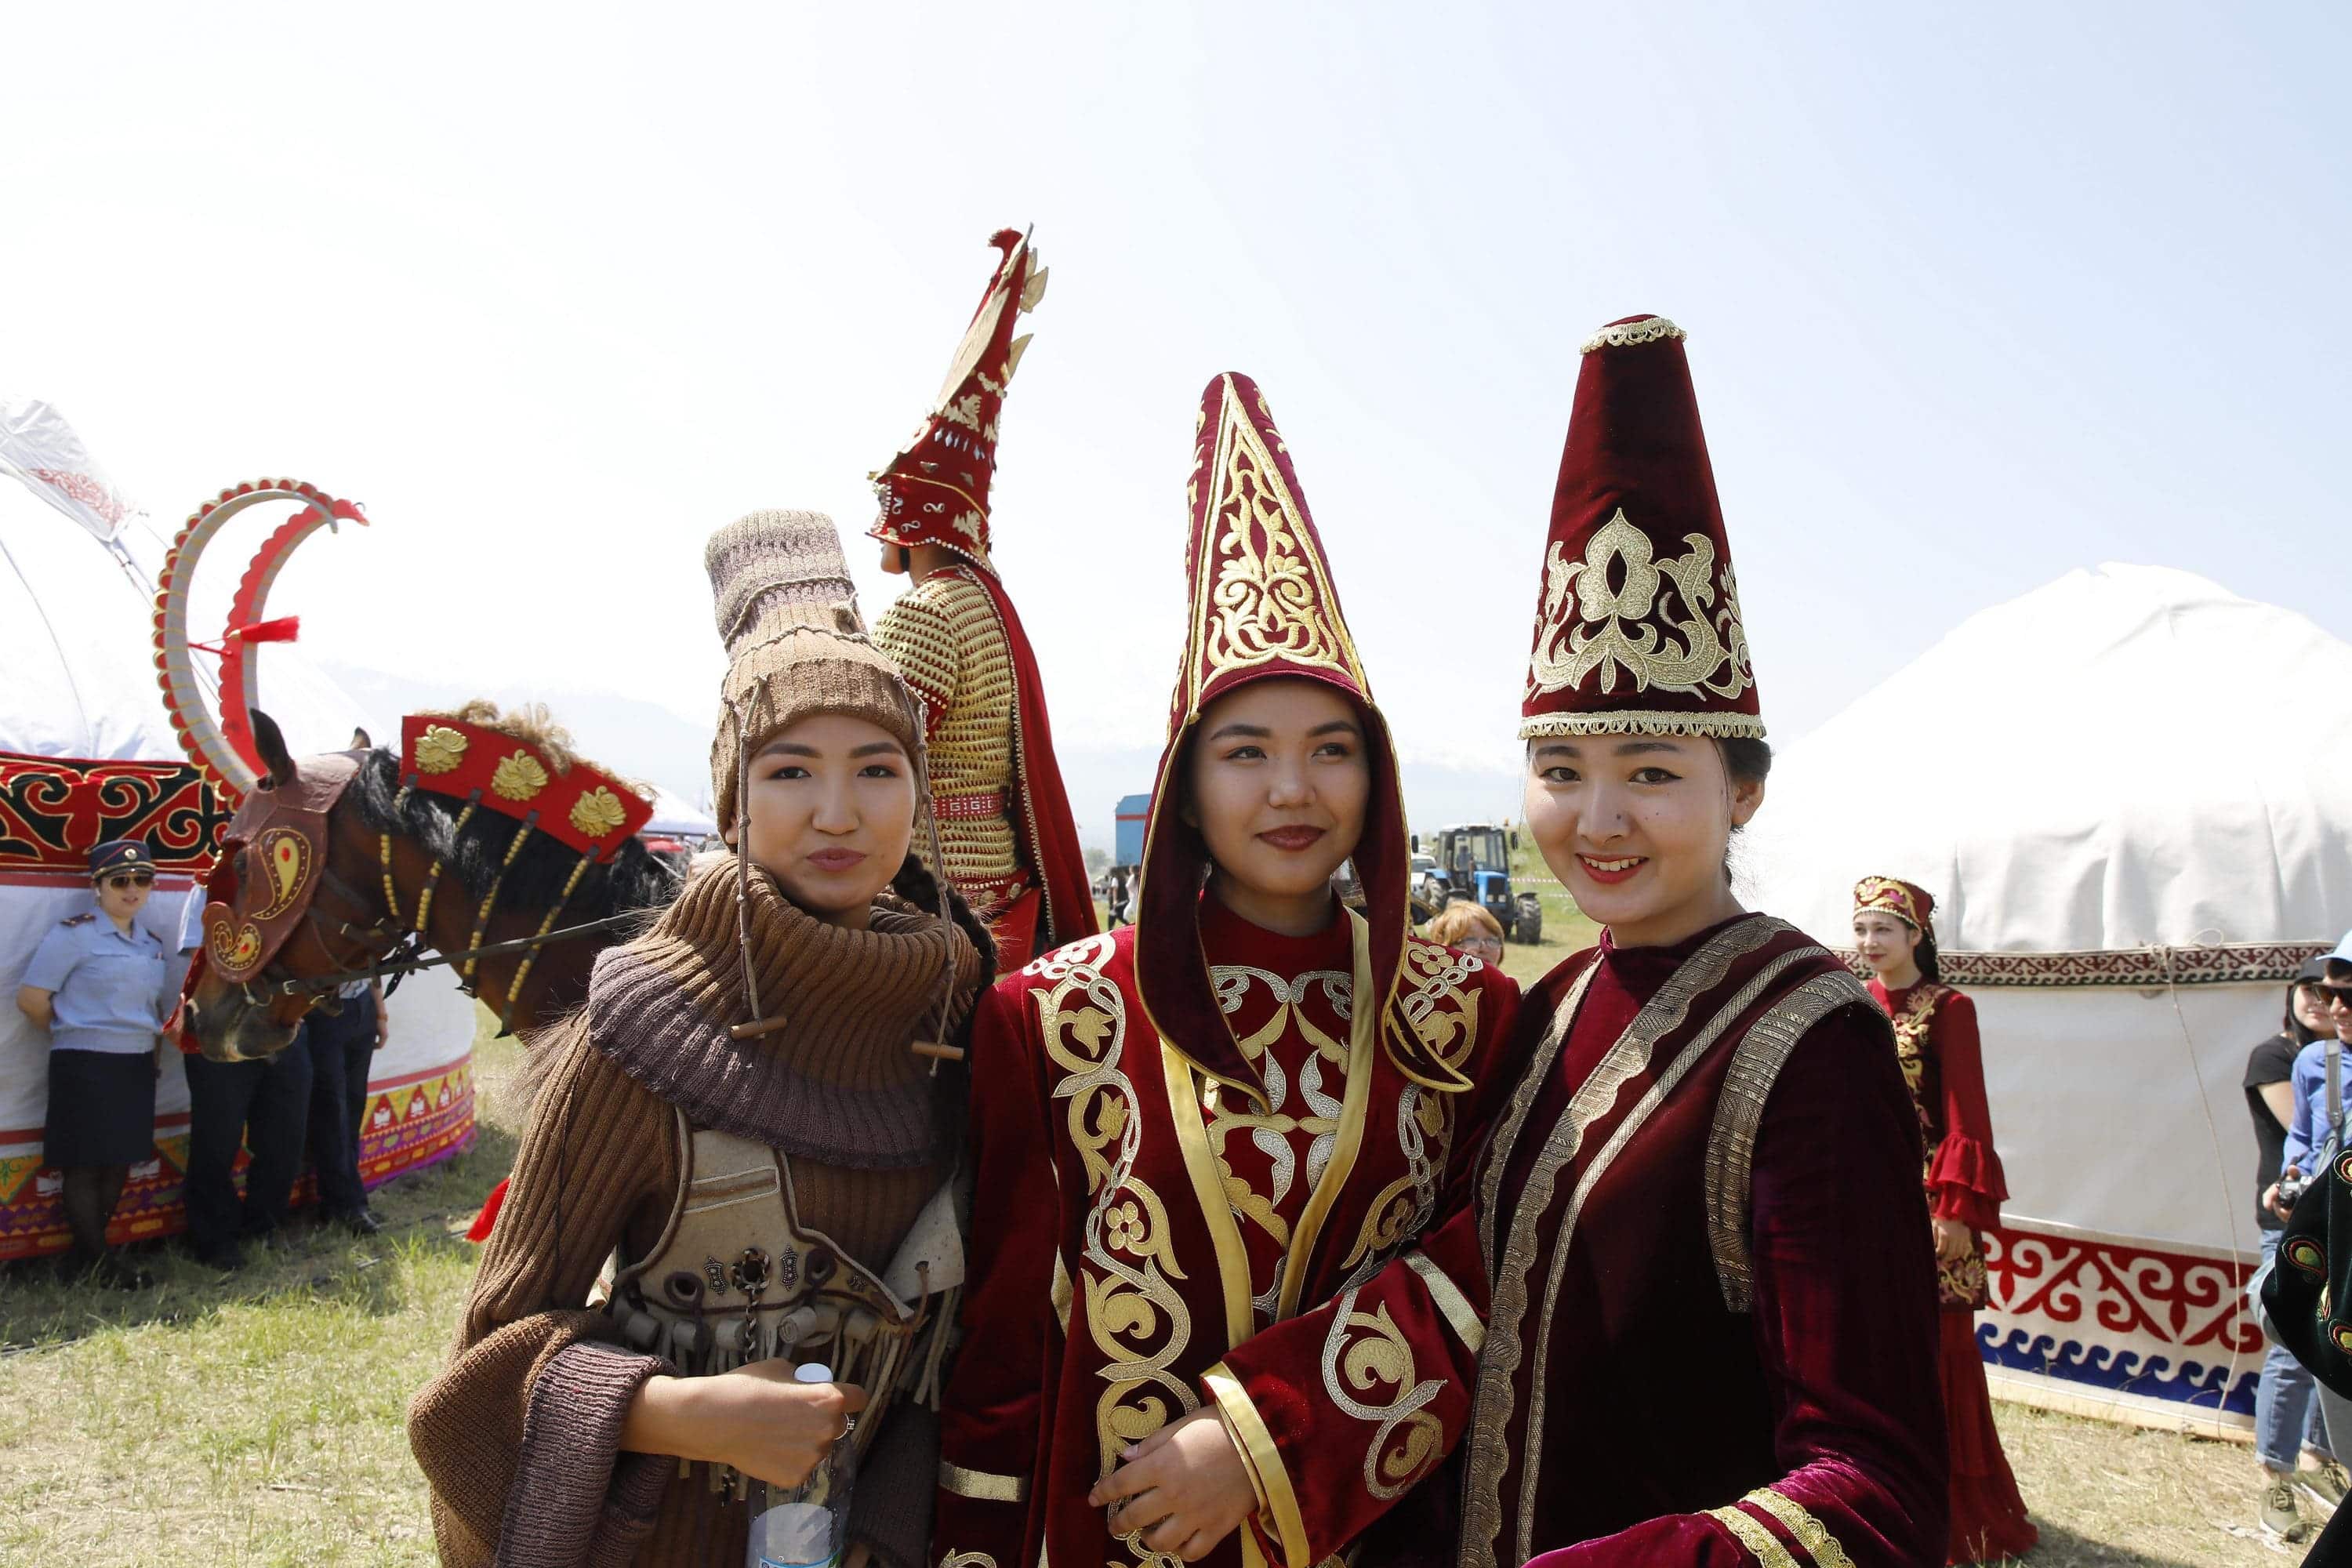 Girls in national costumes. Alexandr Pavskiy